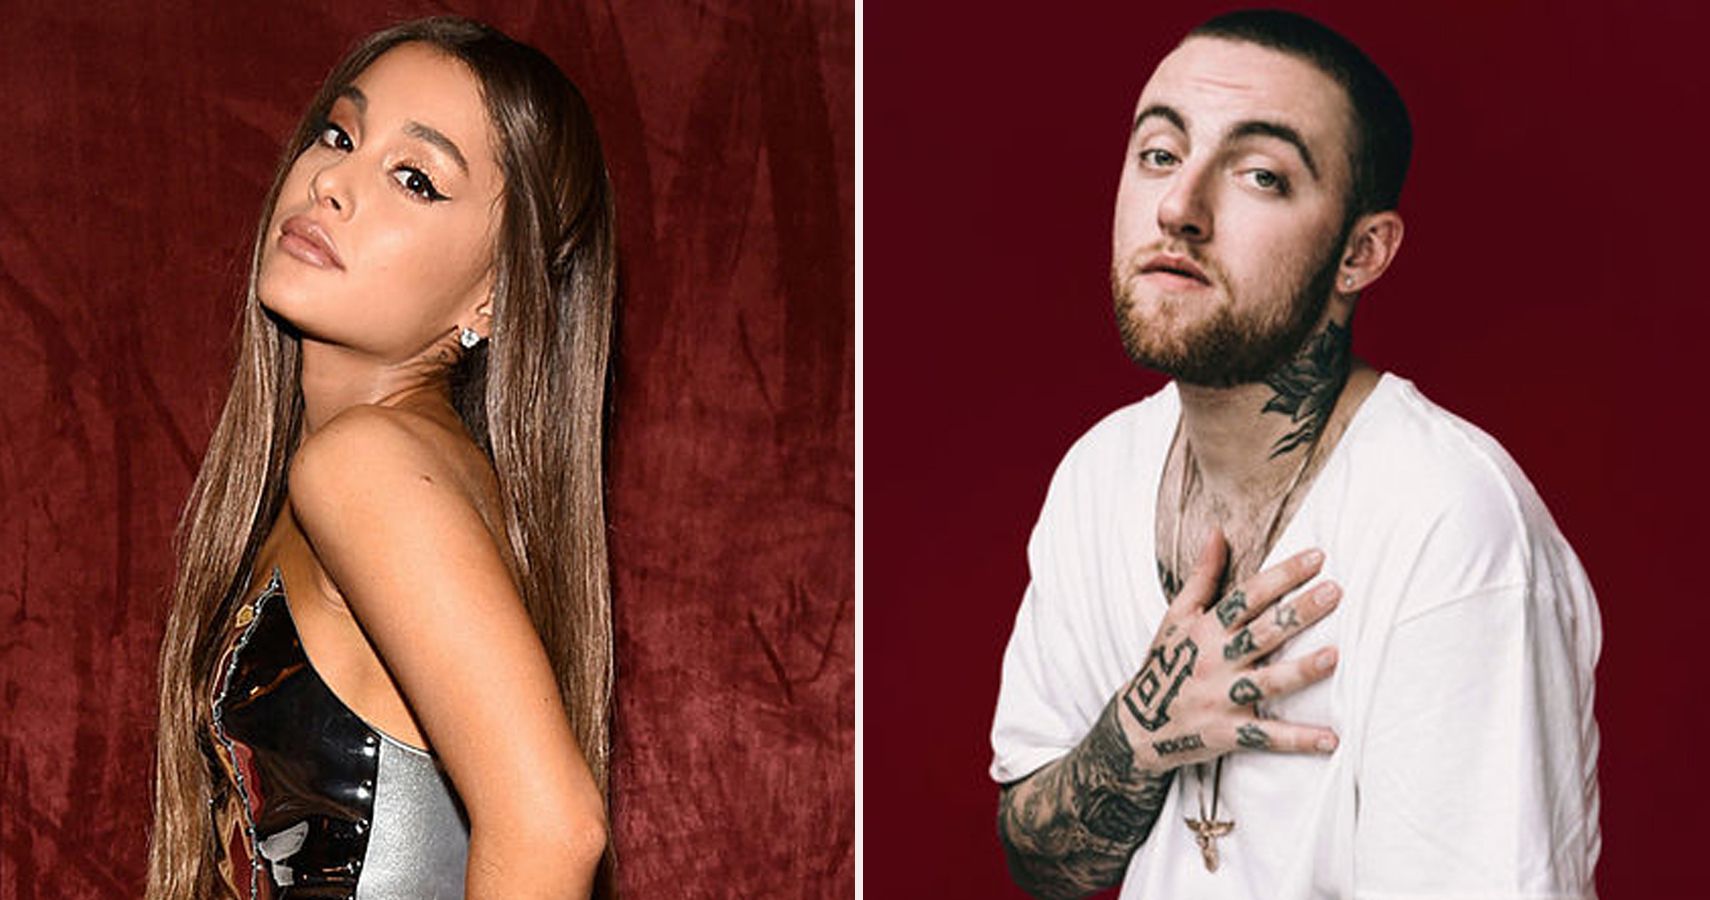 Suspeita-se que Ariana Grande esteja no álbum póstumo do Mac Miller